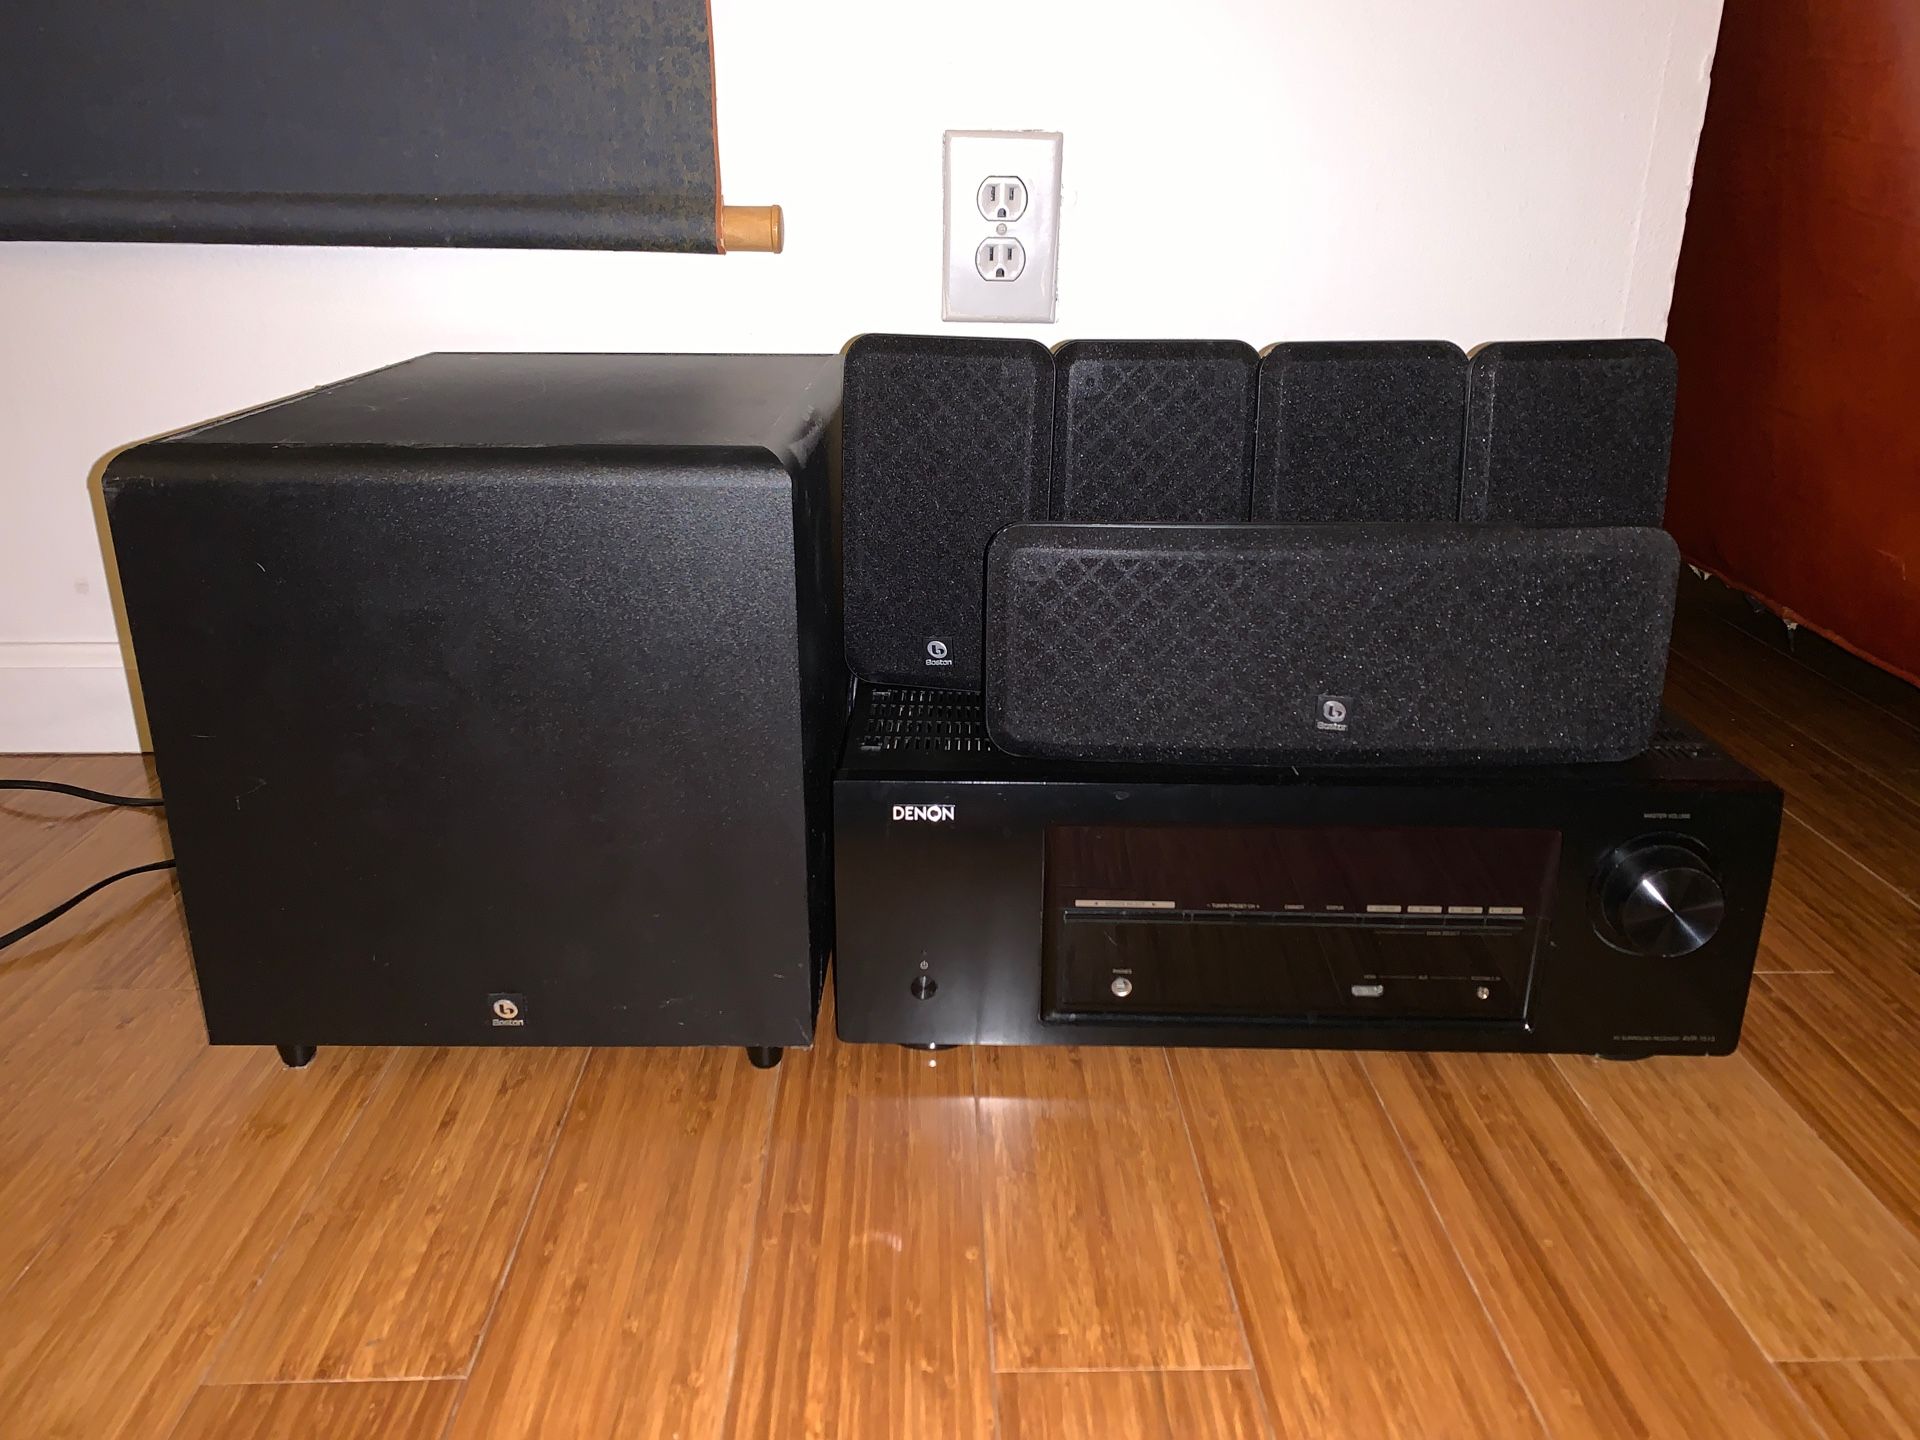 Denon Stereo 5.1 Receiver AVR-1513 w/ 5 Boston Acoustics speakers + subwoofer ($270 new)